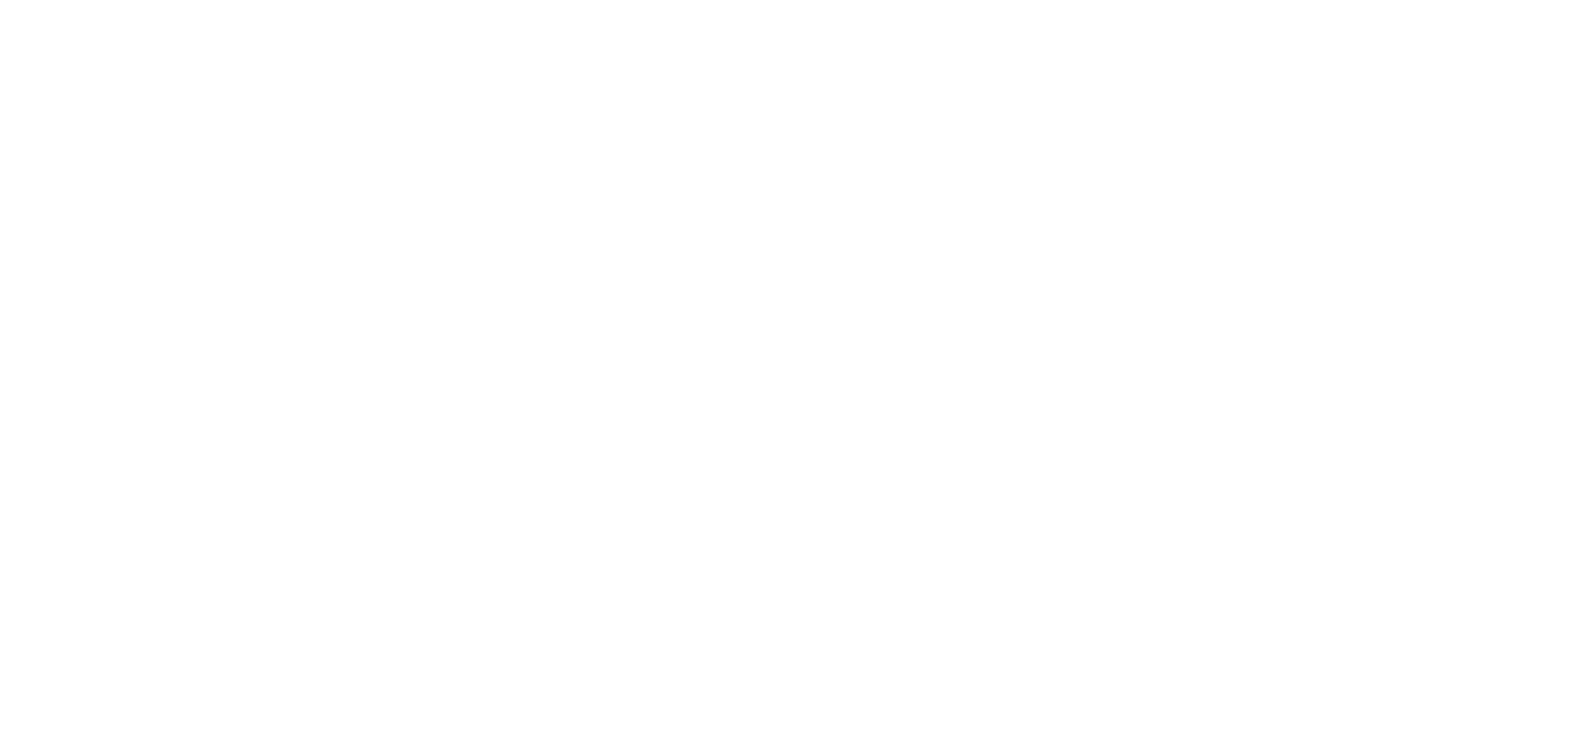 Smith-Midland logo for dark backgrounds (transparent PNG)